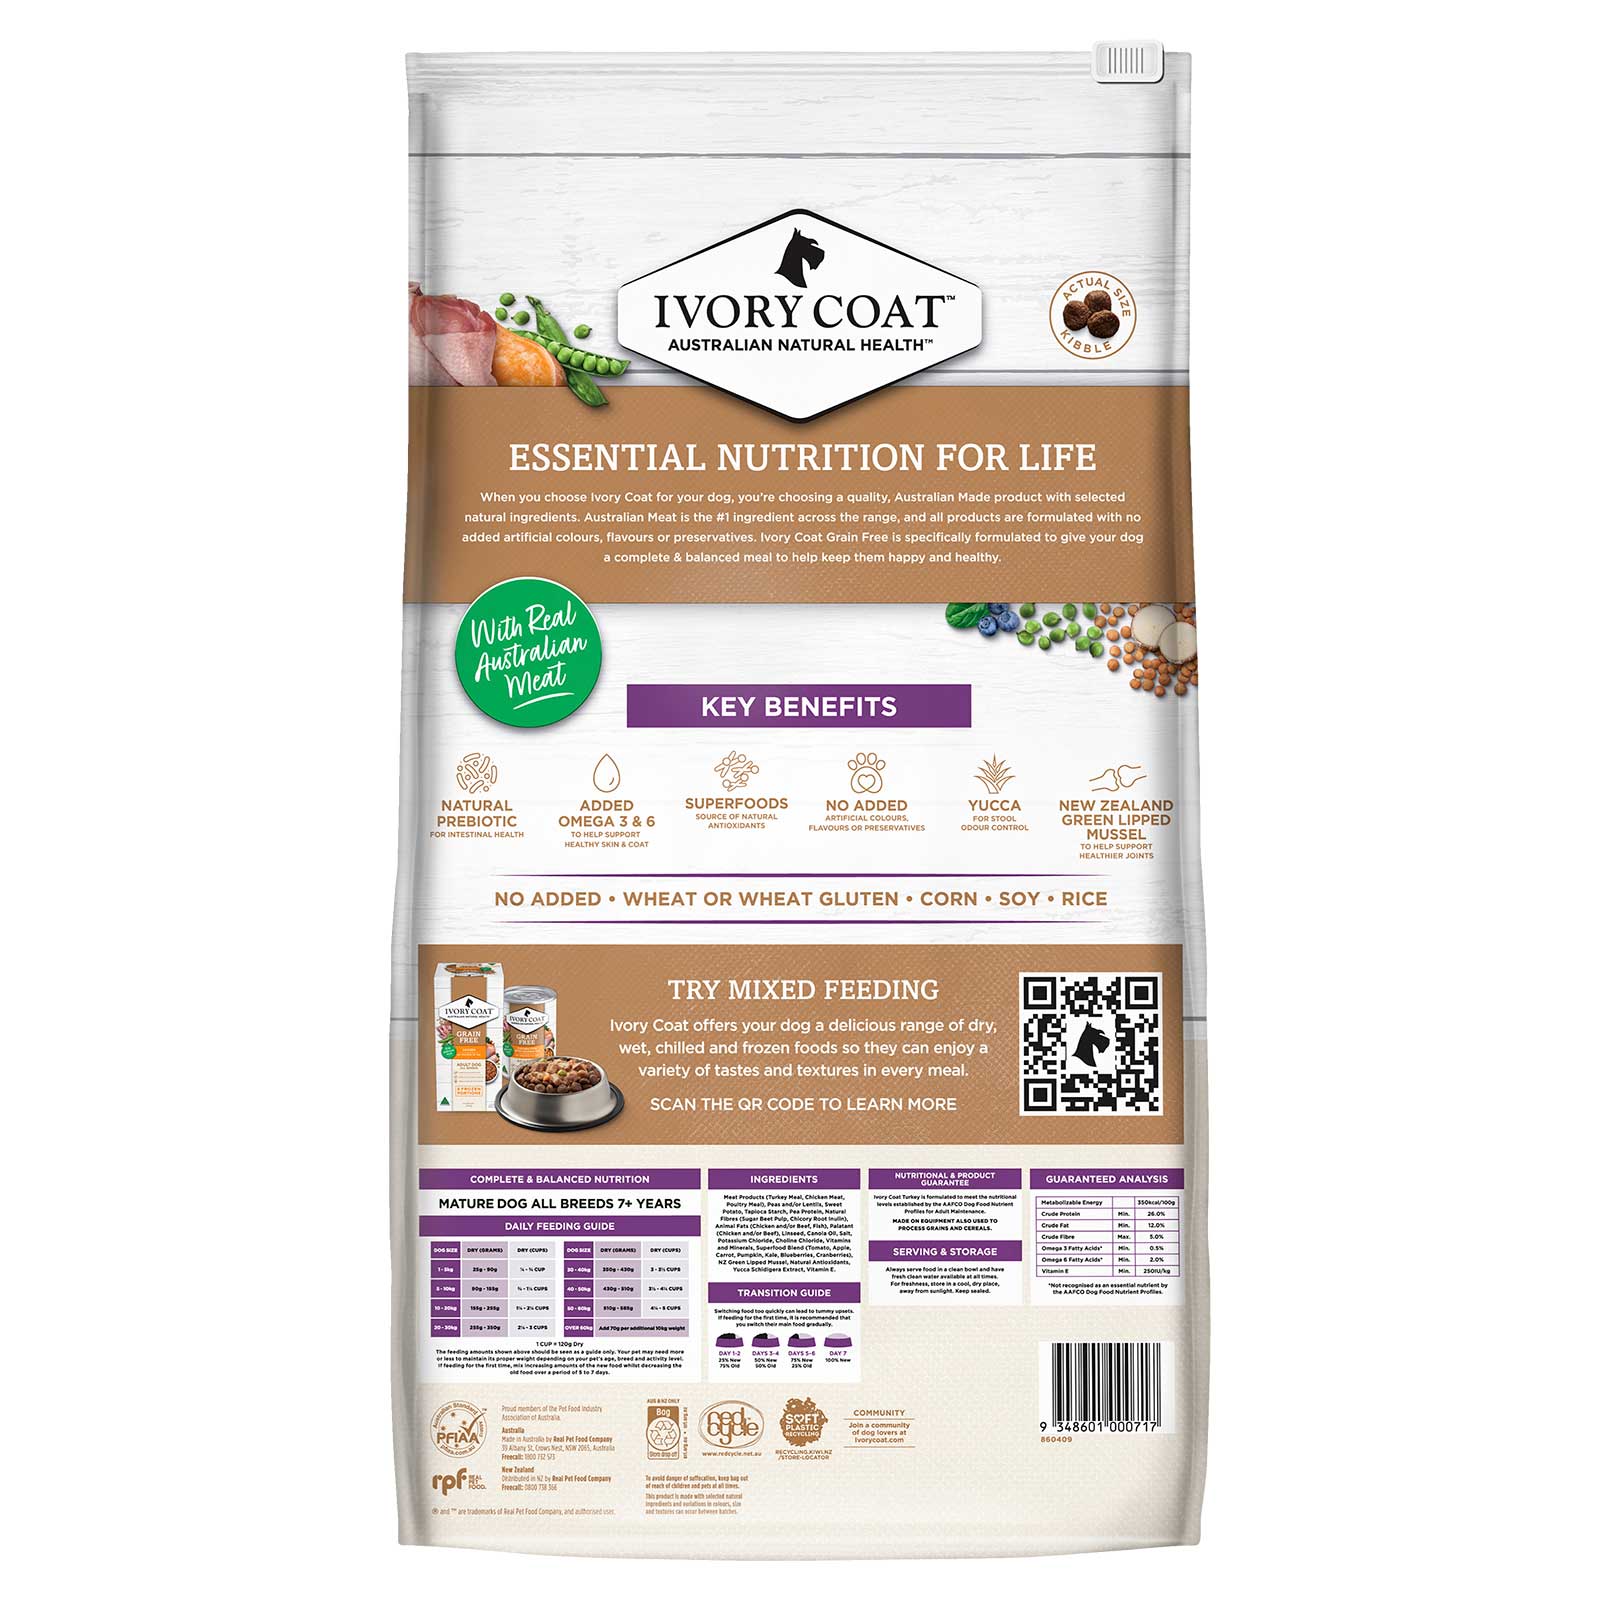 Ivory Coat Grain Free Dog Food Senior/Reduced Fat Turkey